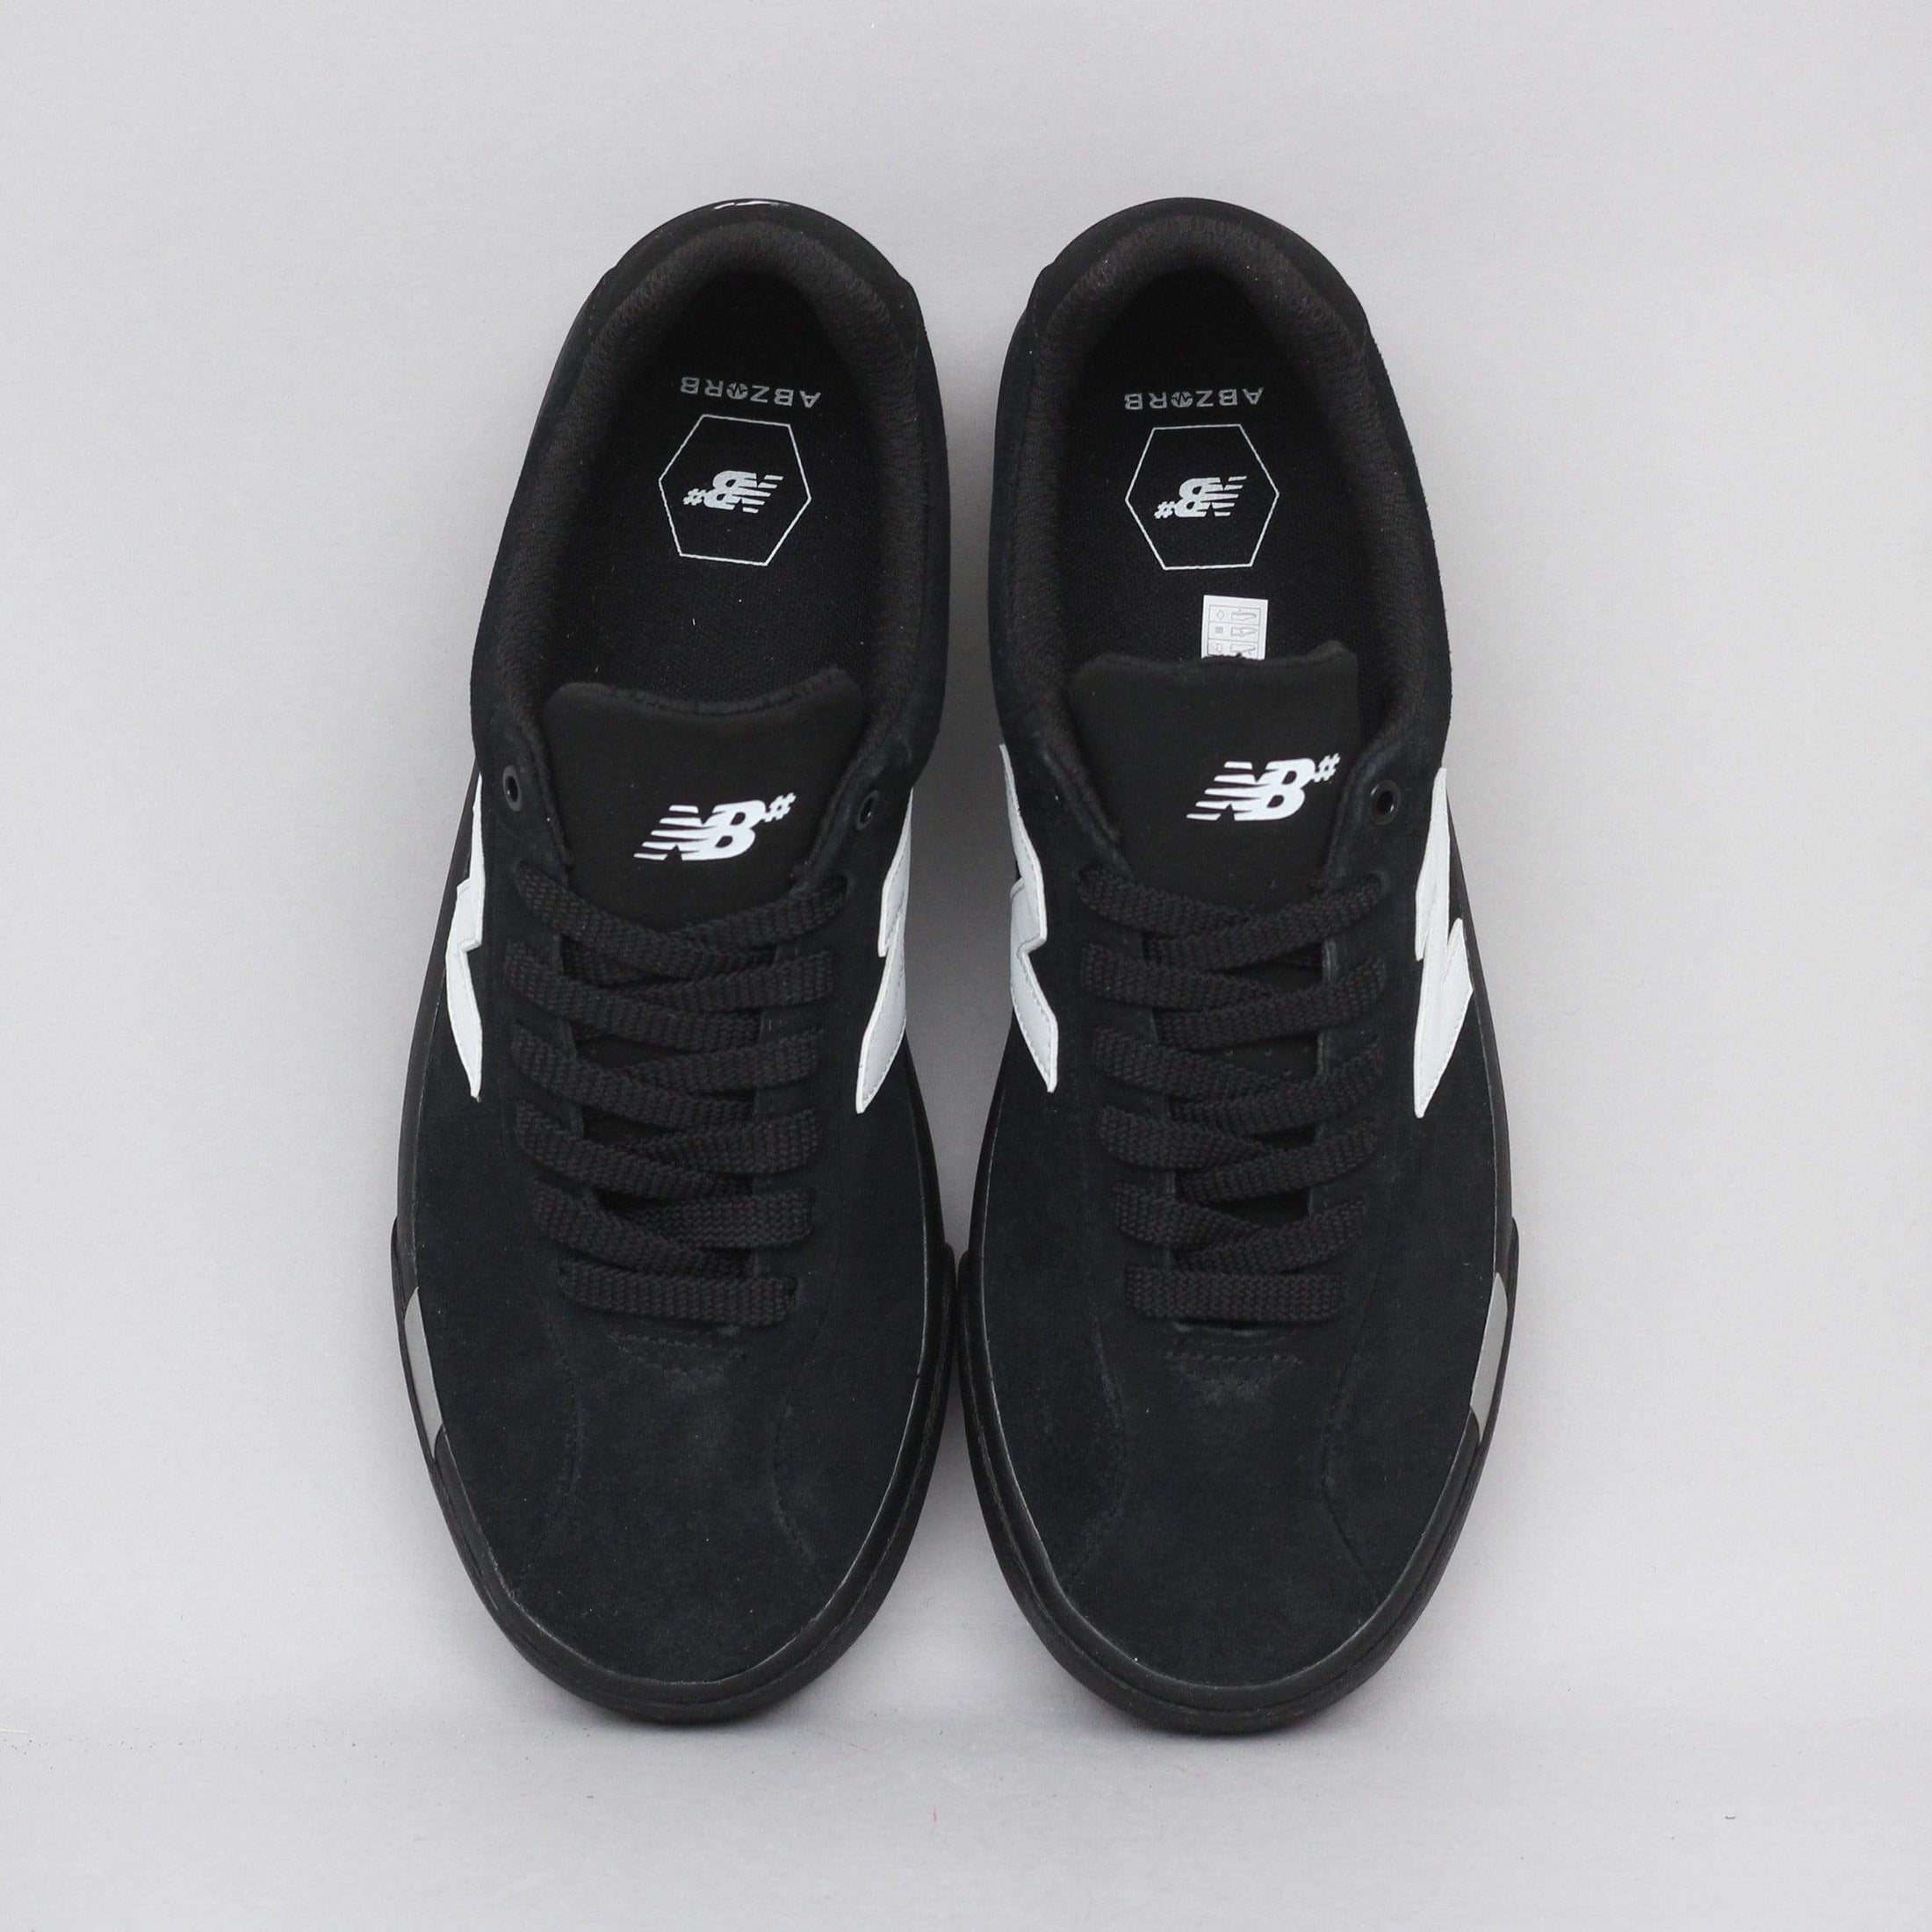 New Balance 22 Shoes Black / White